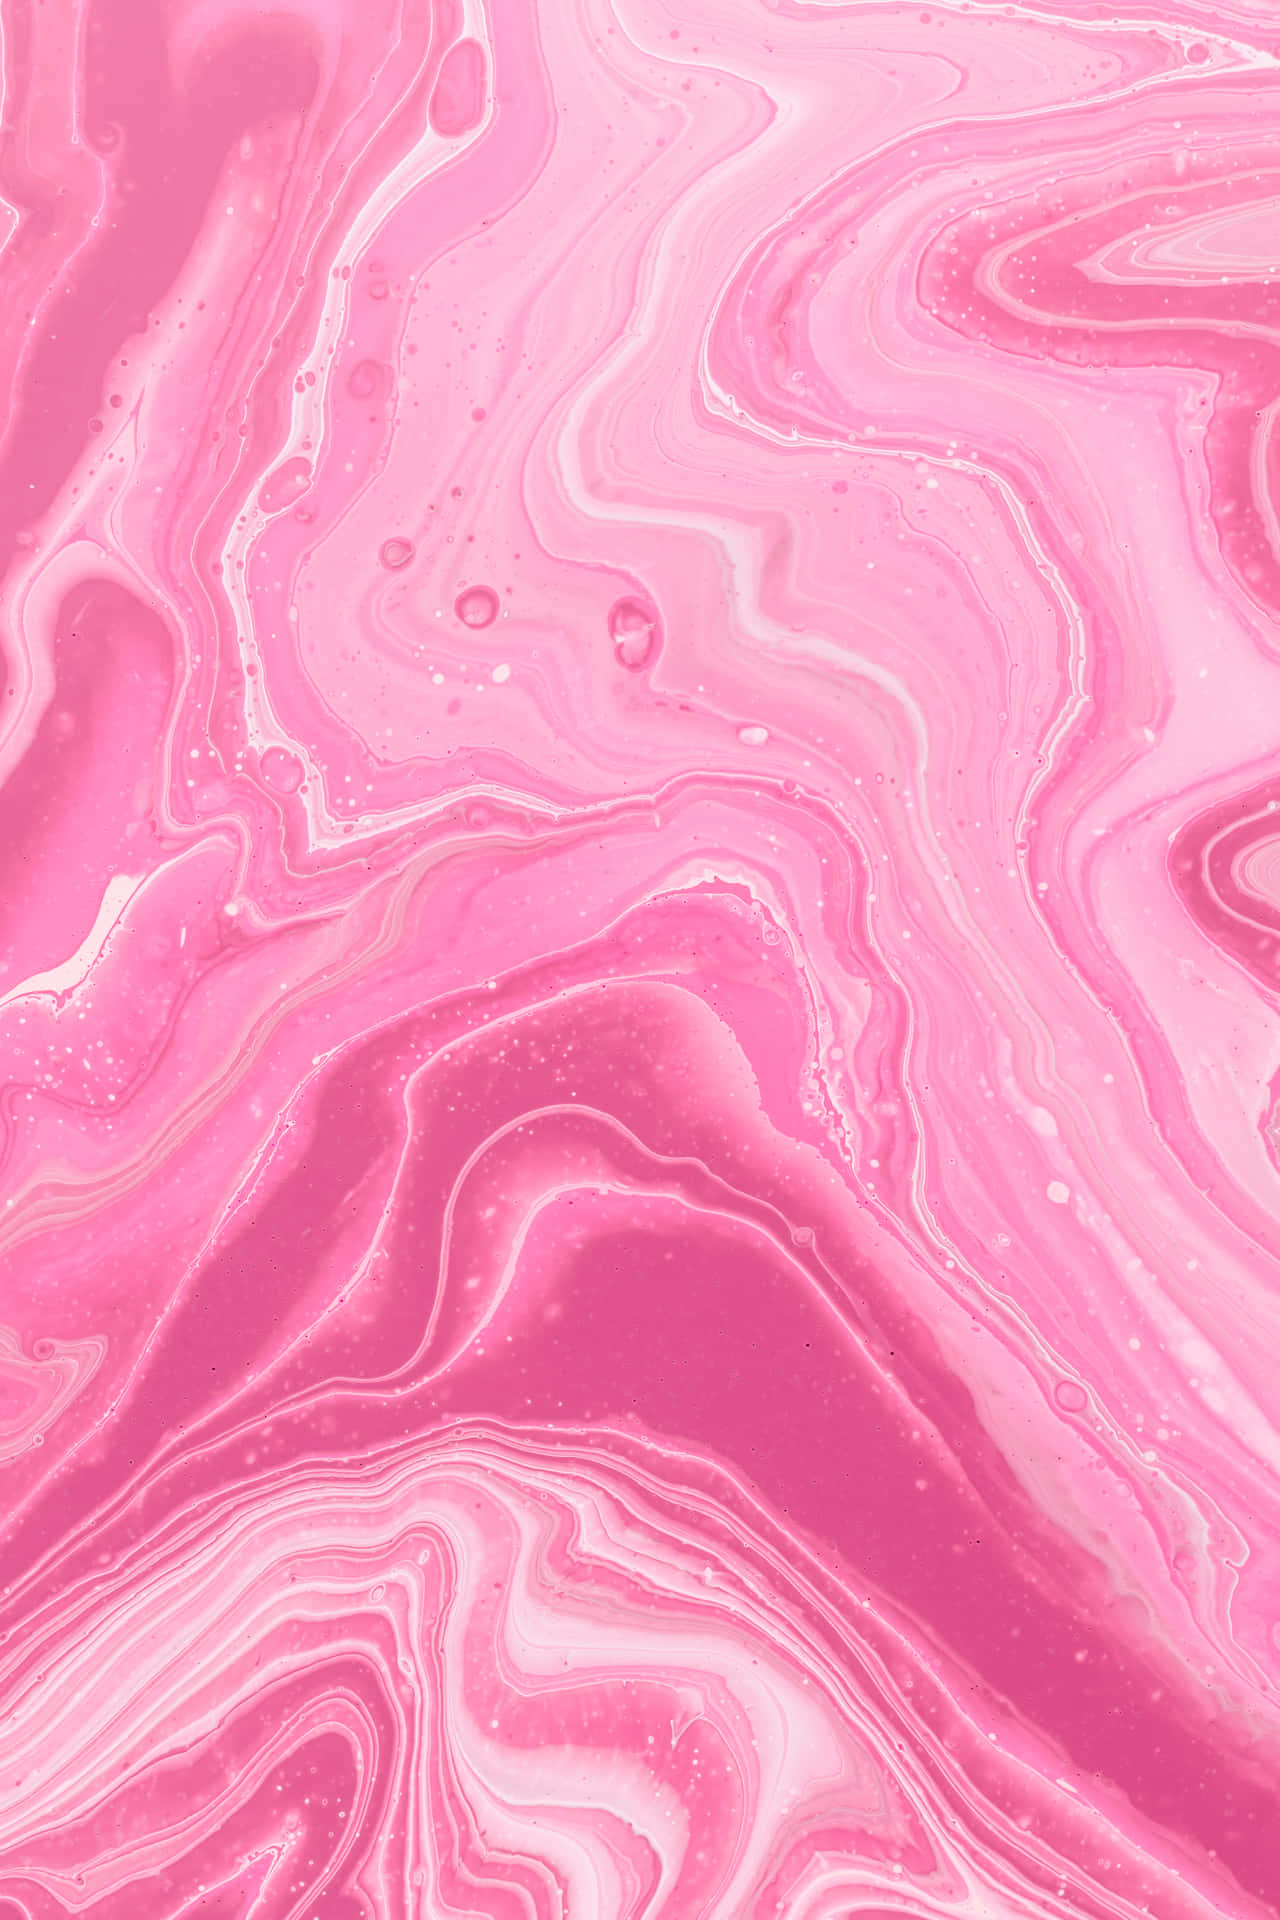 Delightful Pink Girly Background Design